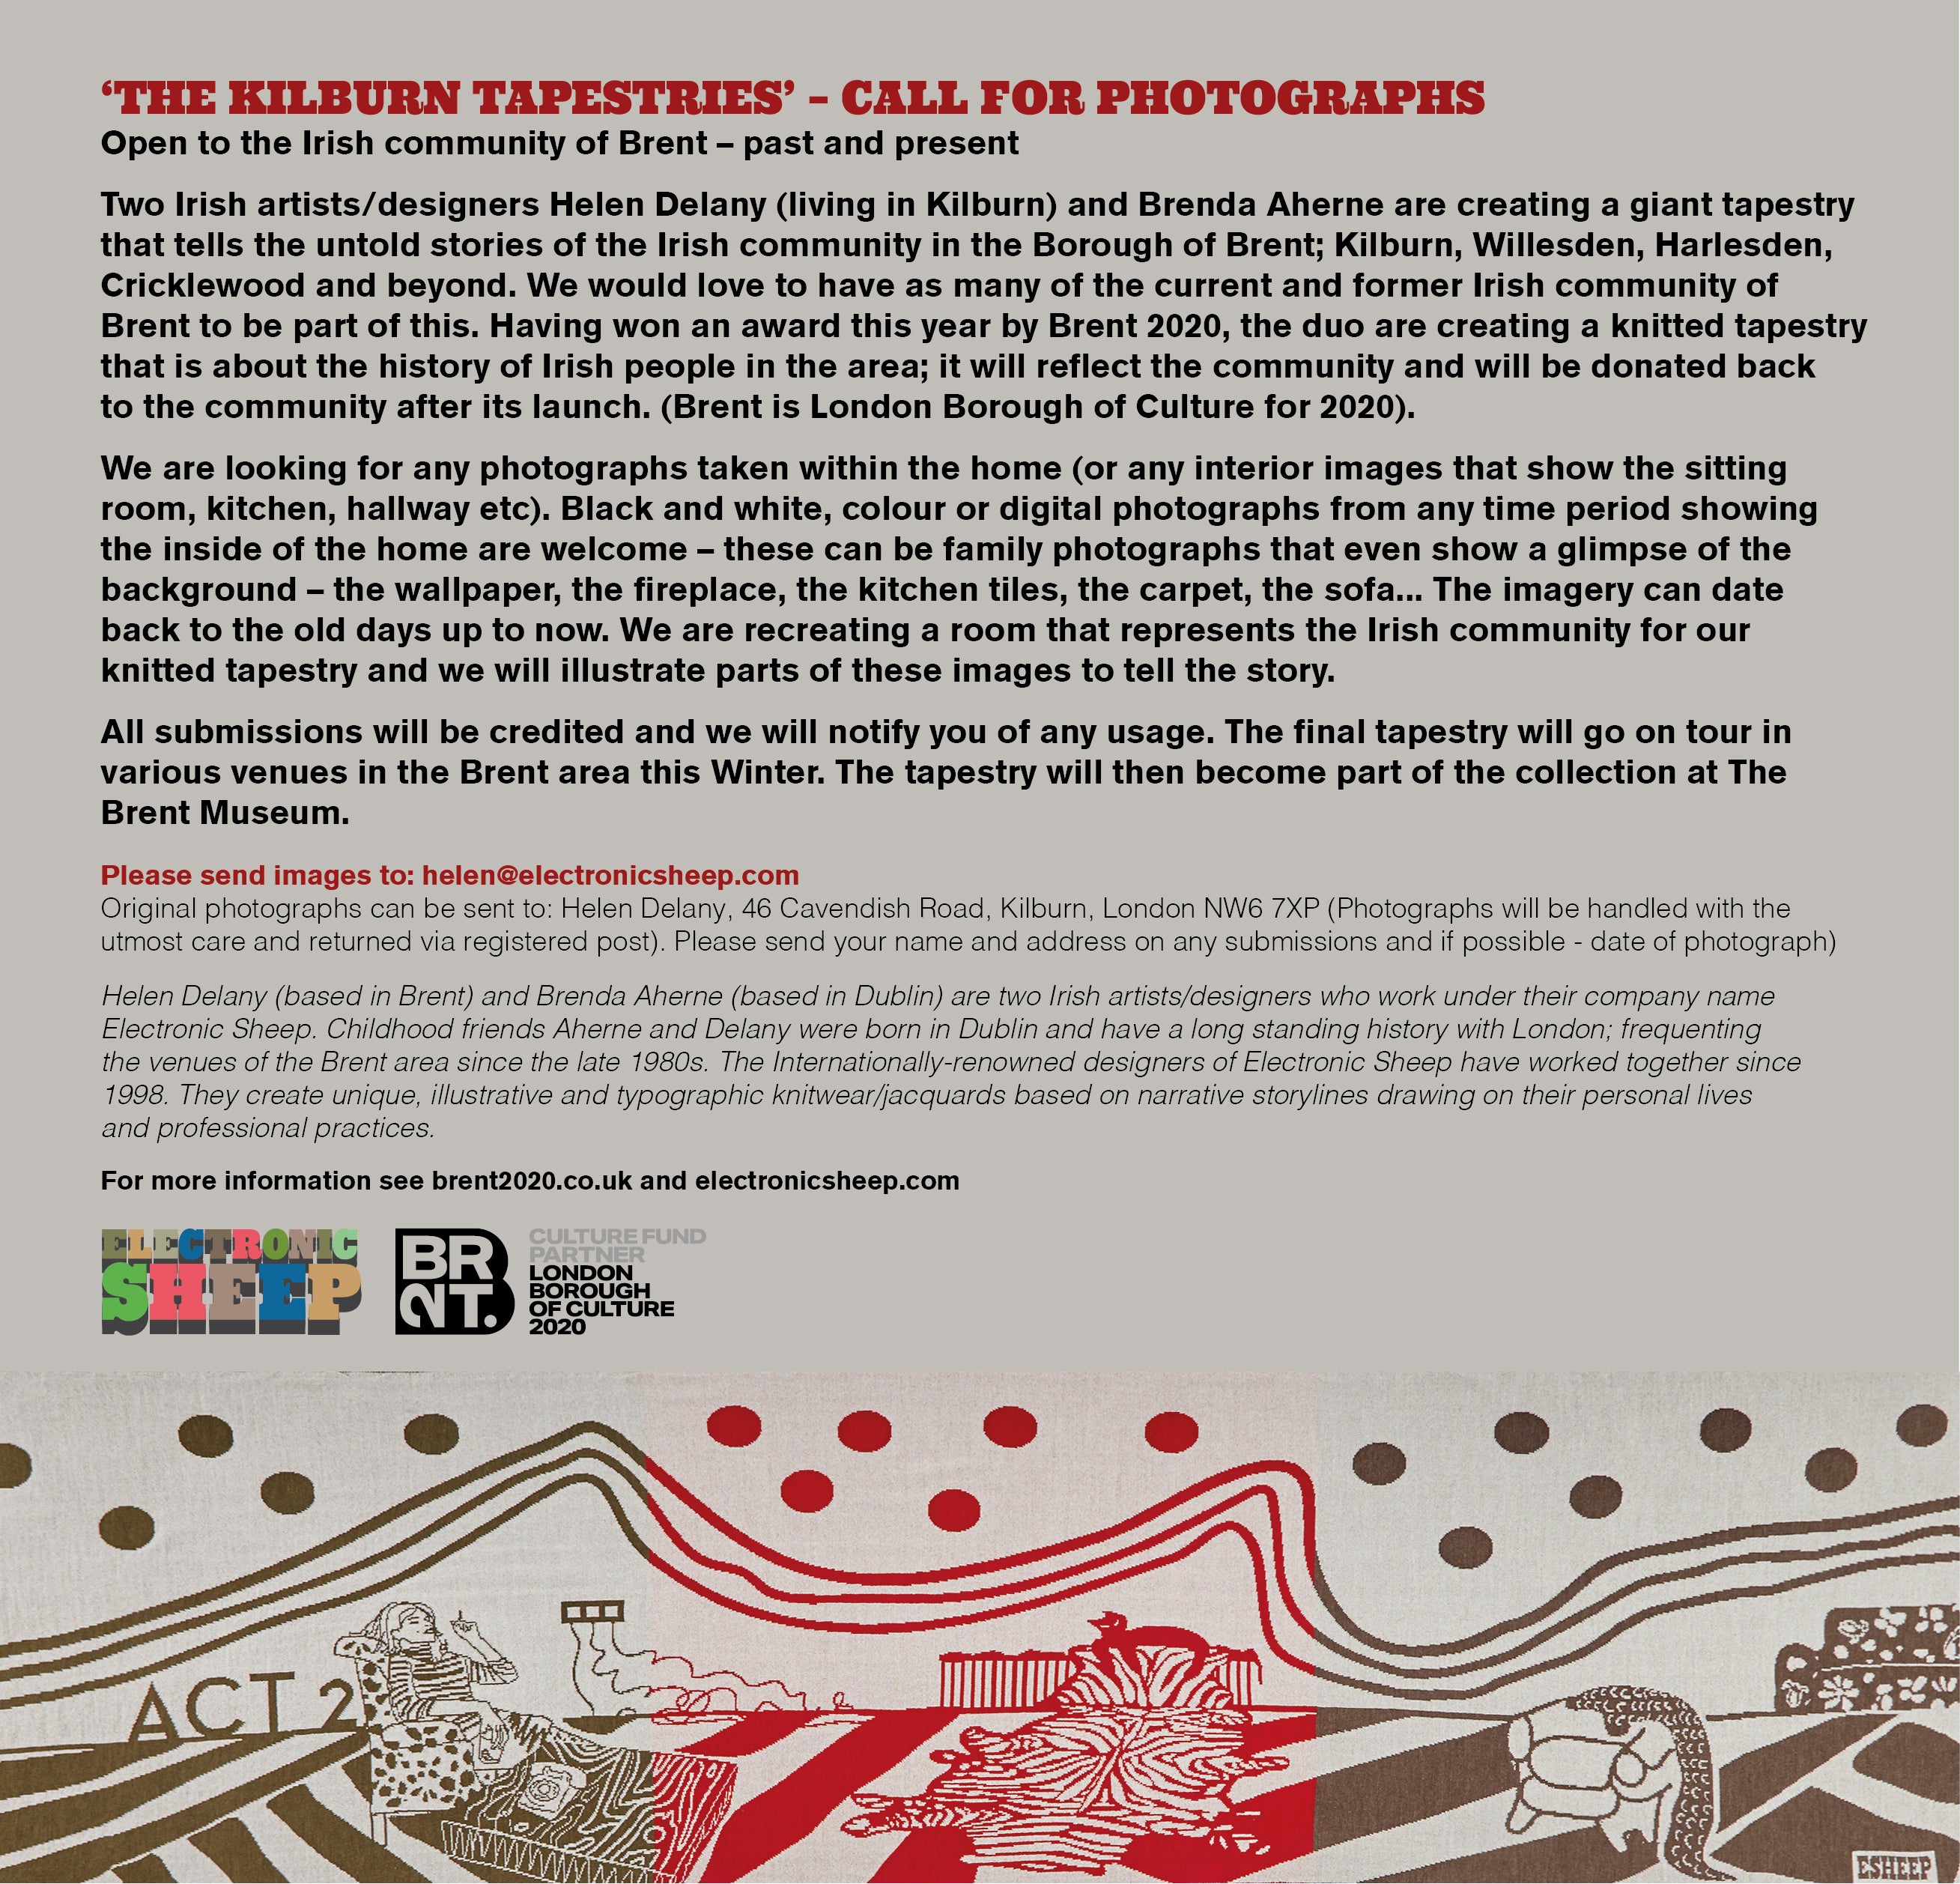 CALL FOR PHOTOGRAPHS! THE KILBURN TAPESTRIES